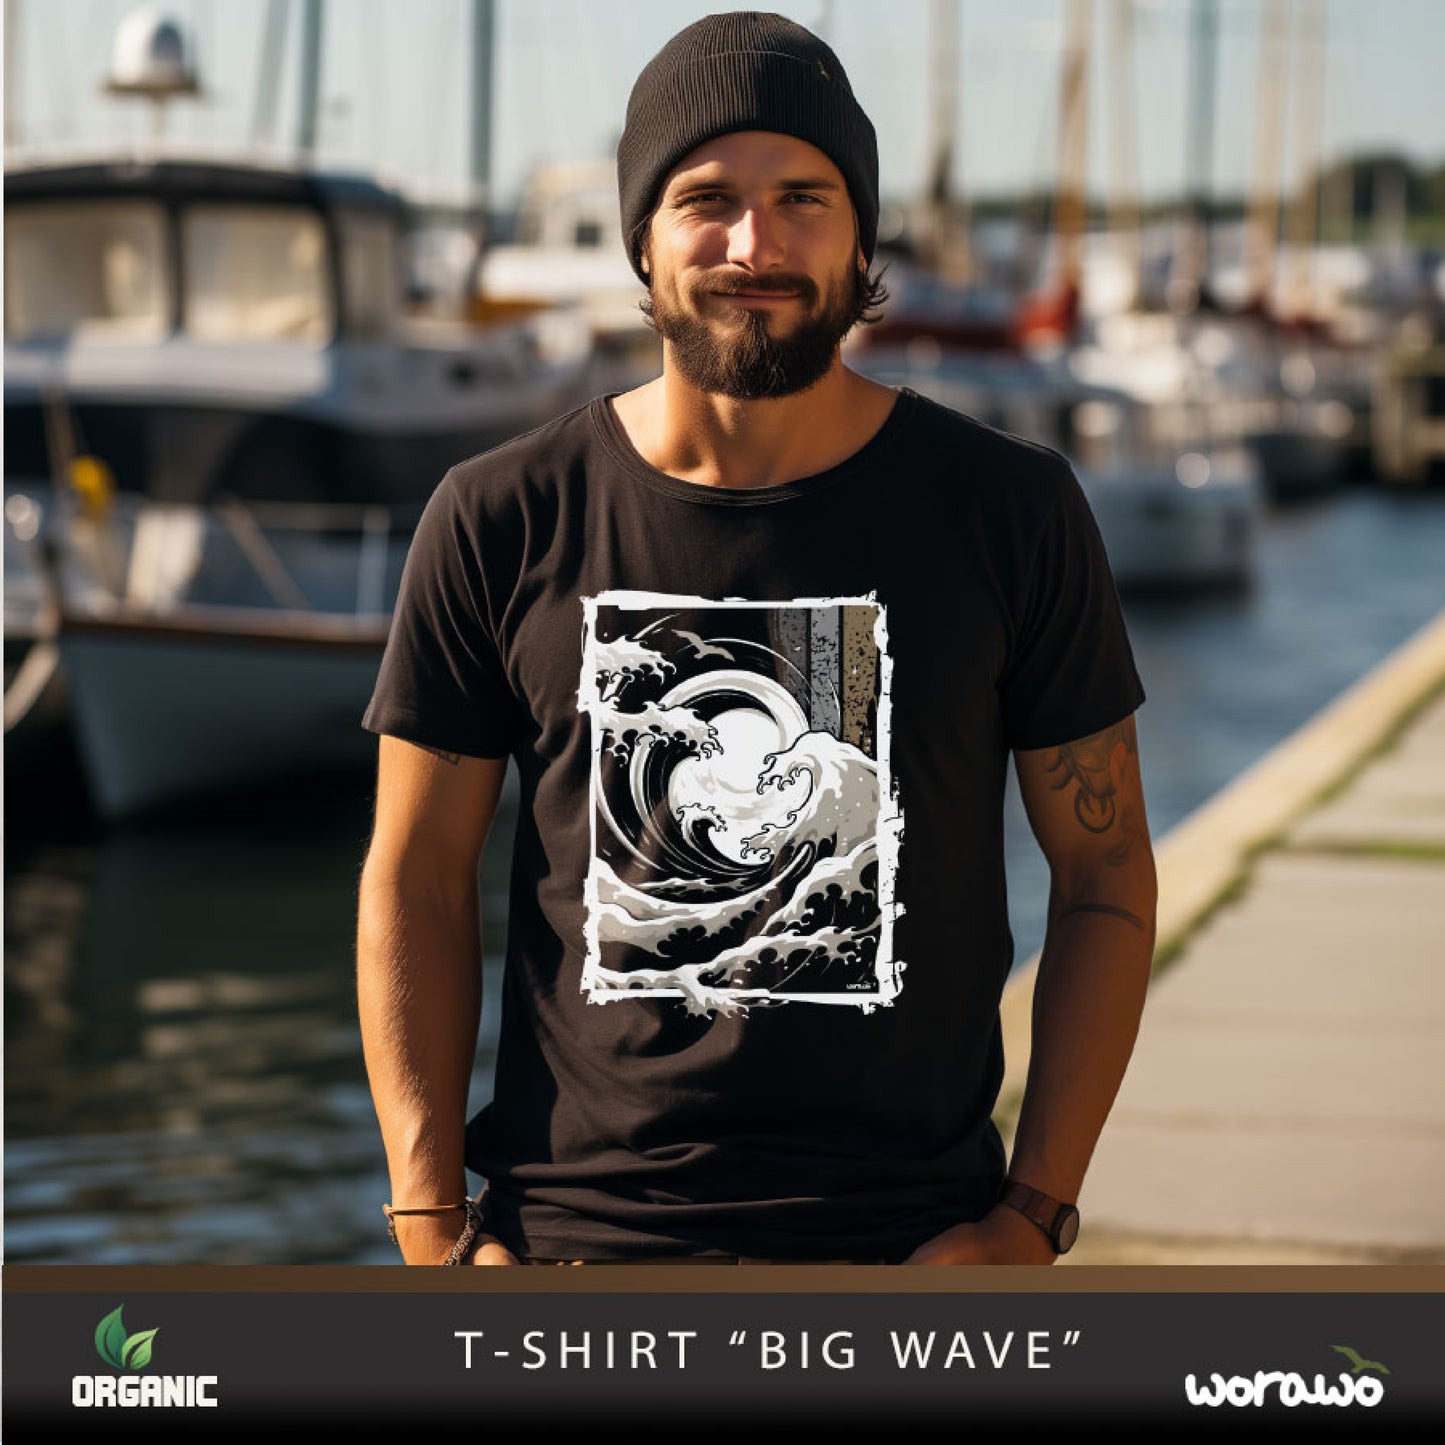 T-Shirt "Big Wave"